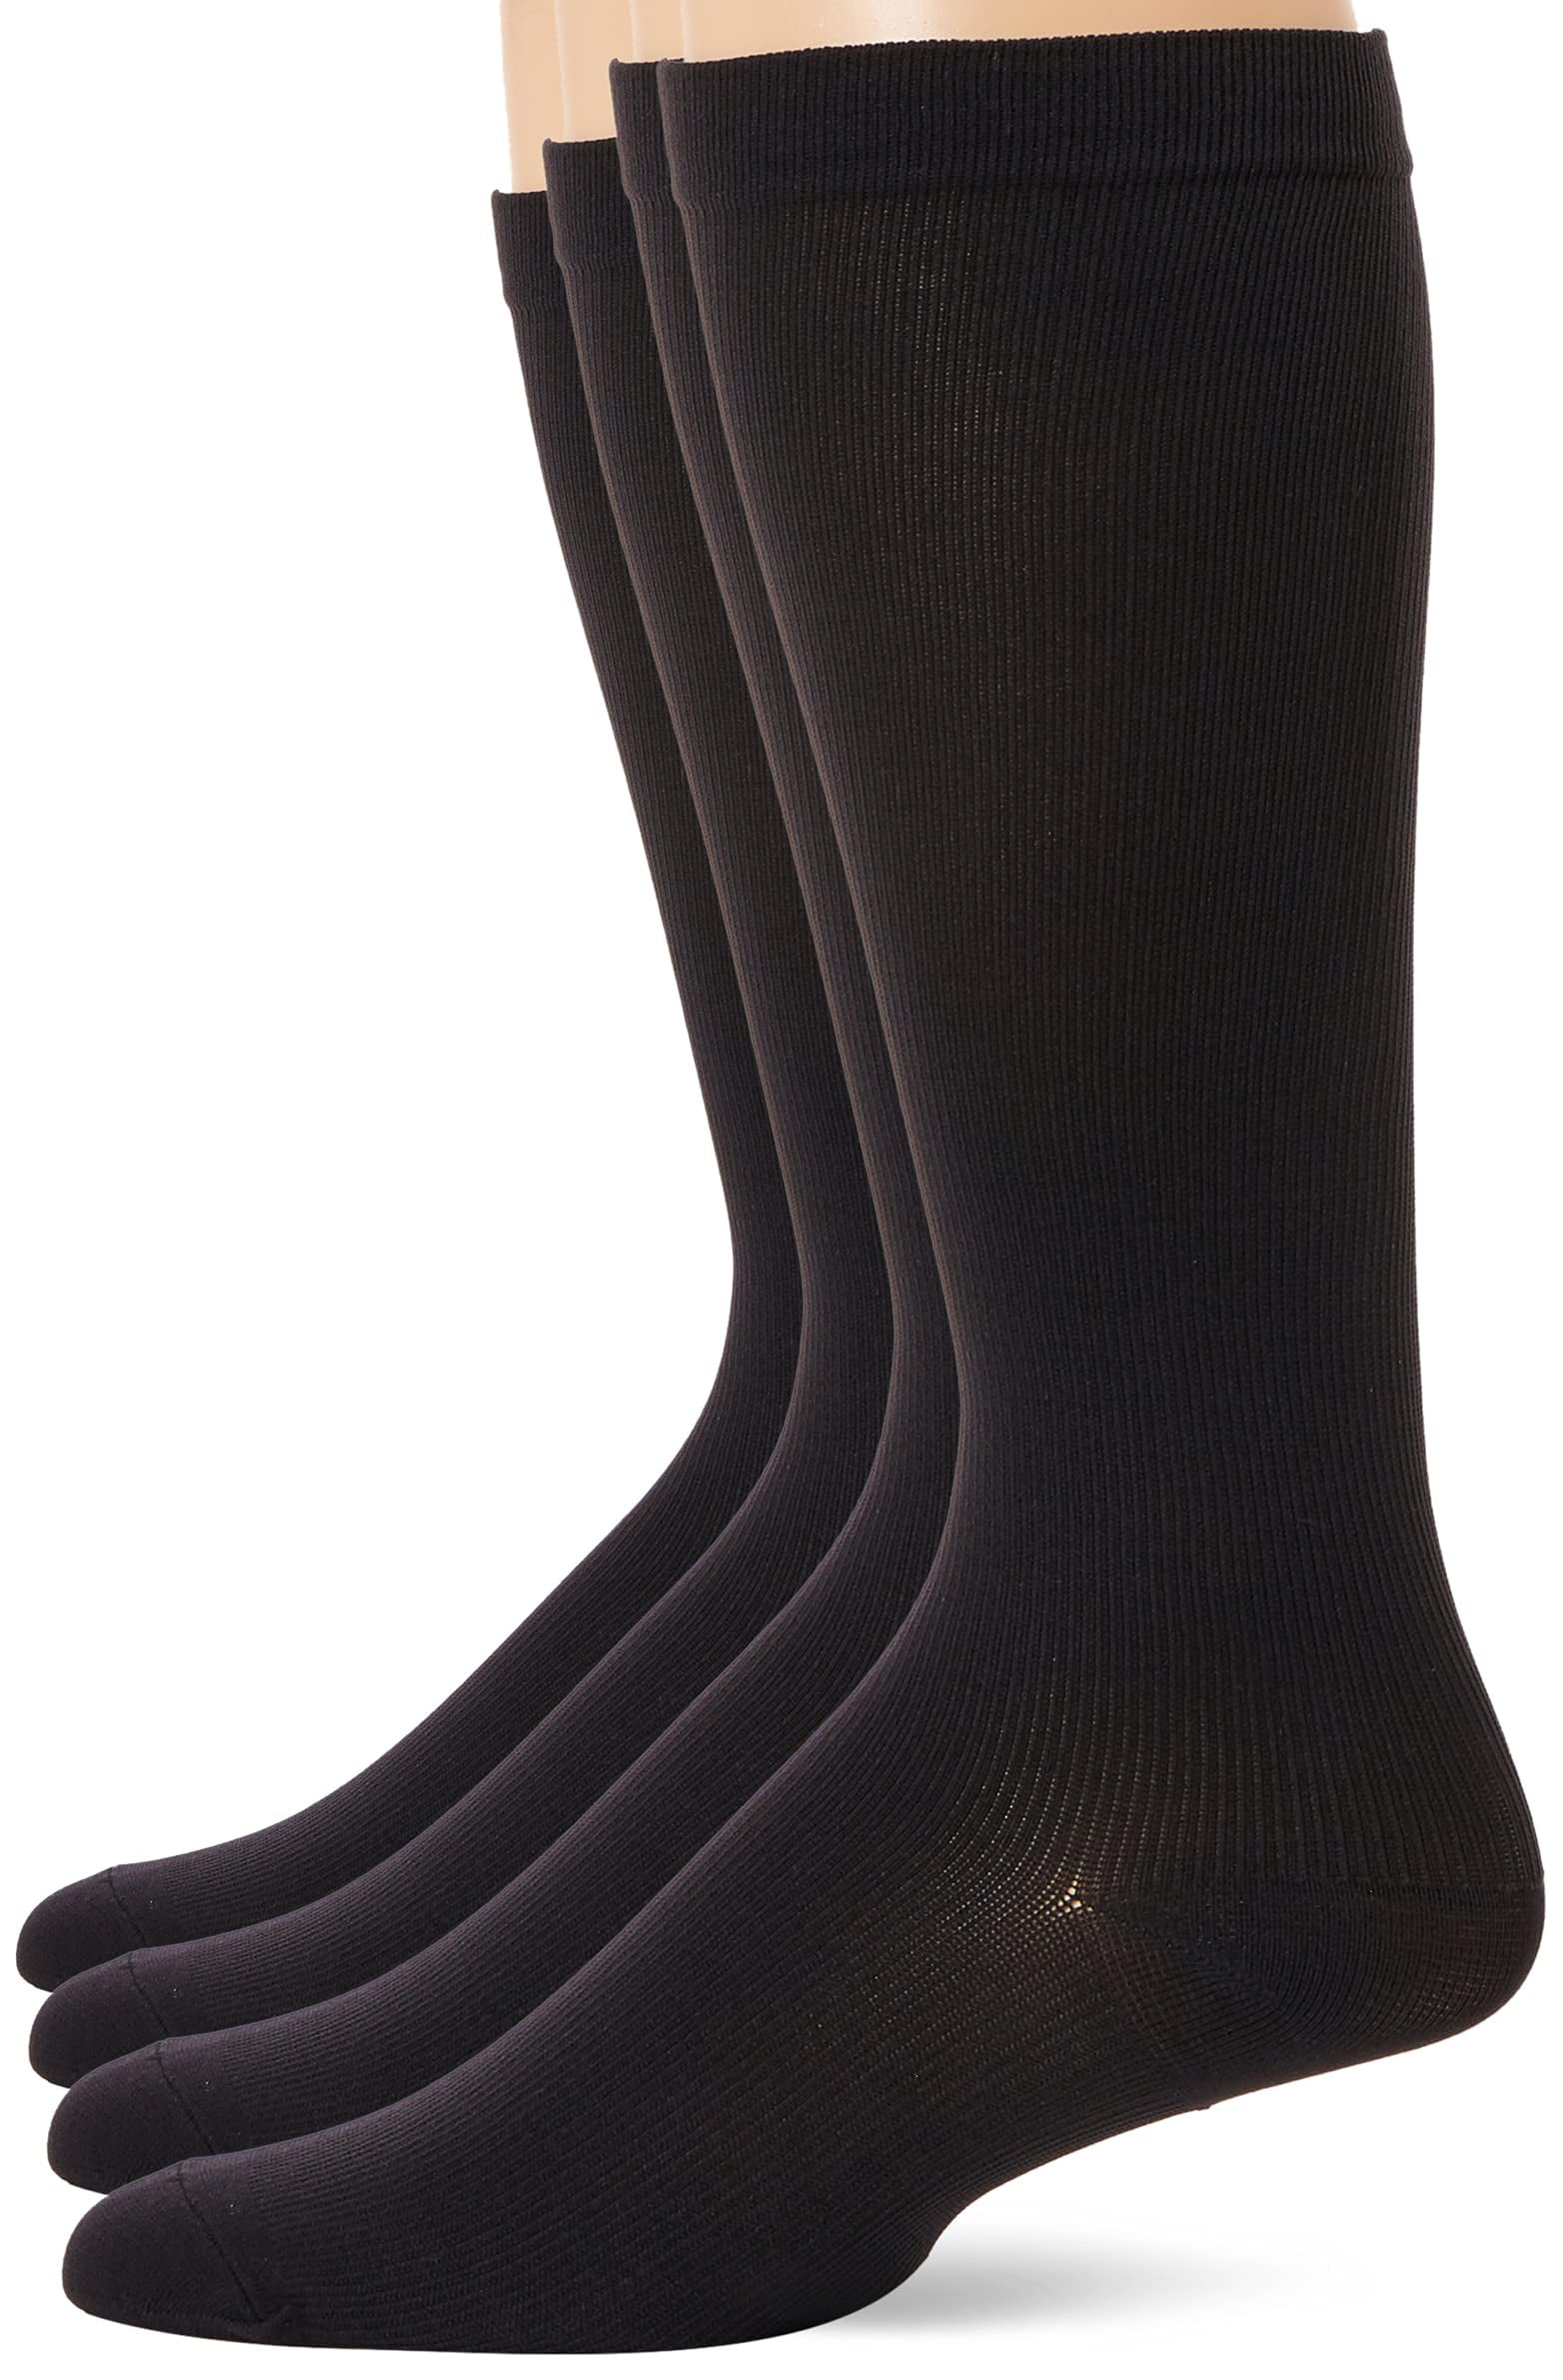 MediPeds mens 4 Pack Mild Compression Over the Calf athletic socks ...